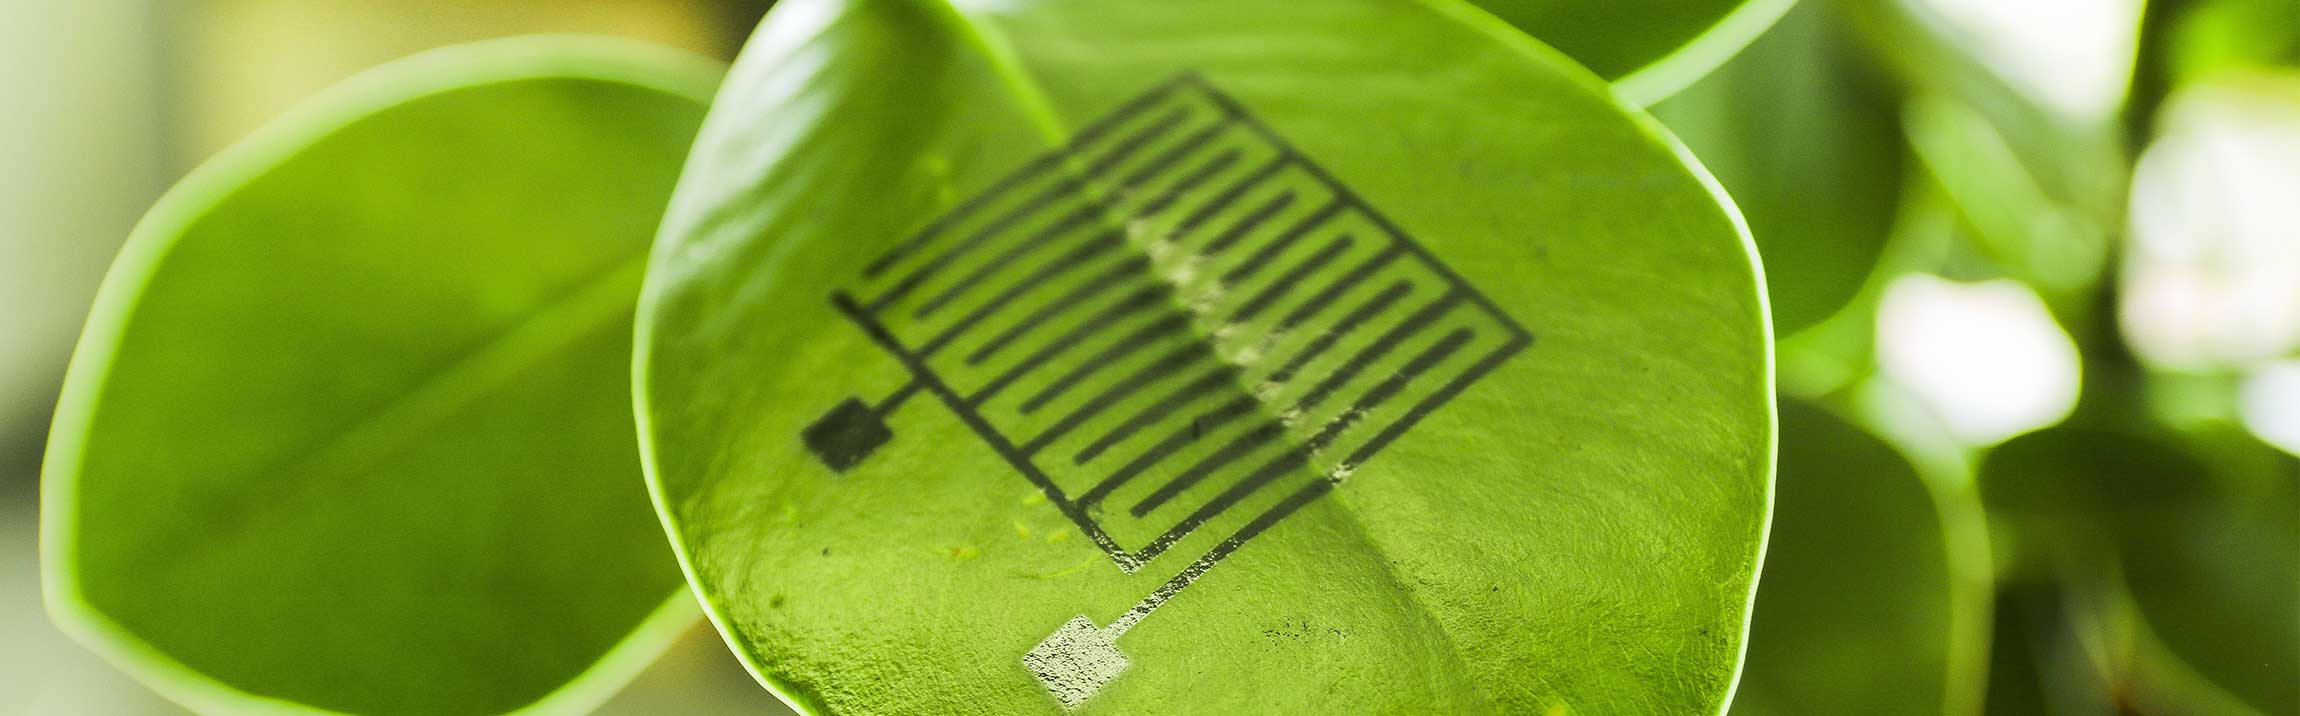 Sensors printed on a plant leaf.